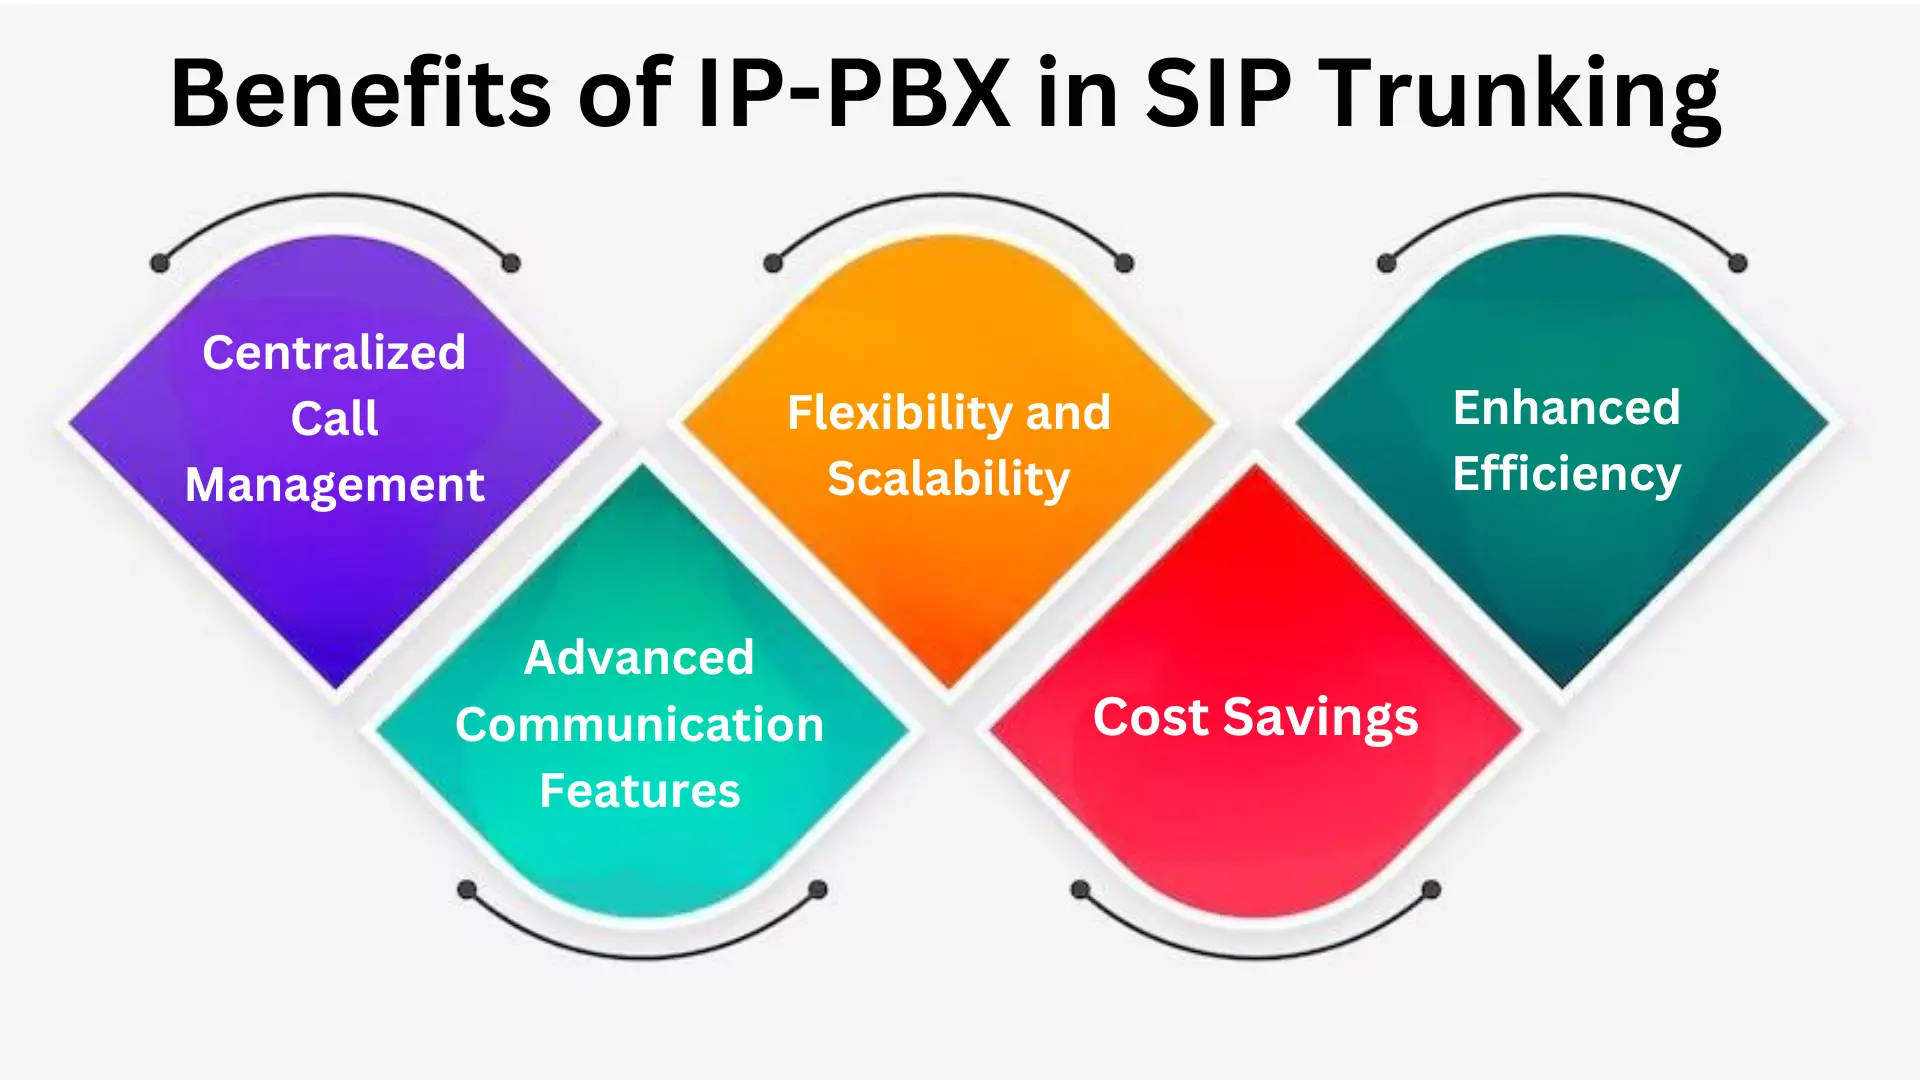 Benefits of IP-PBX in SIP Trunking